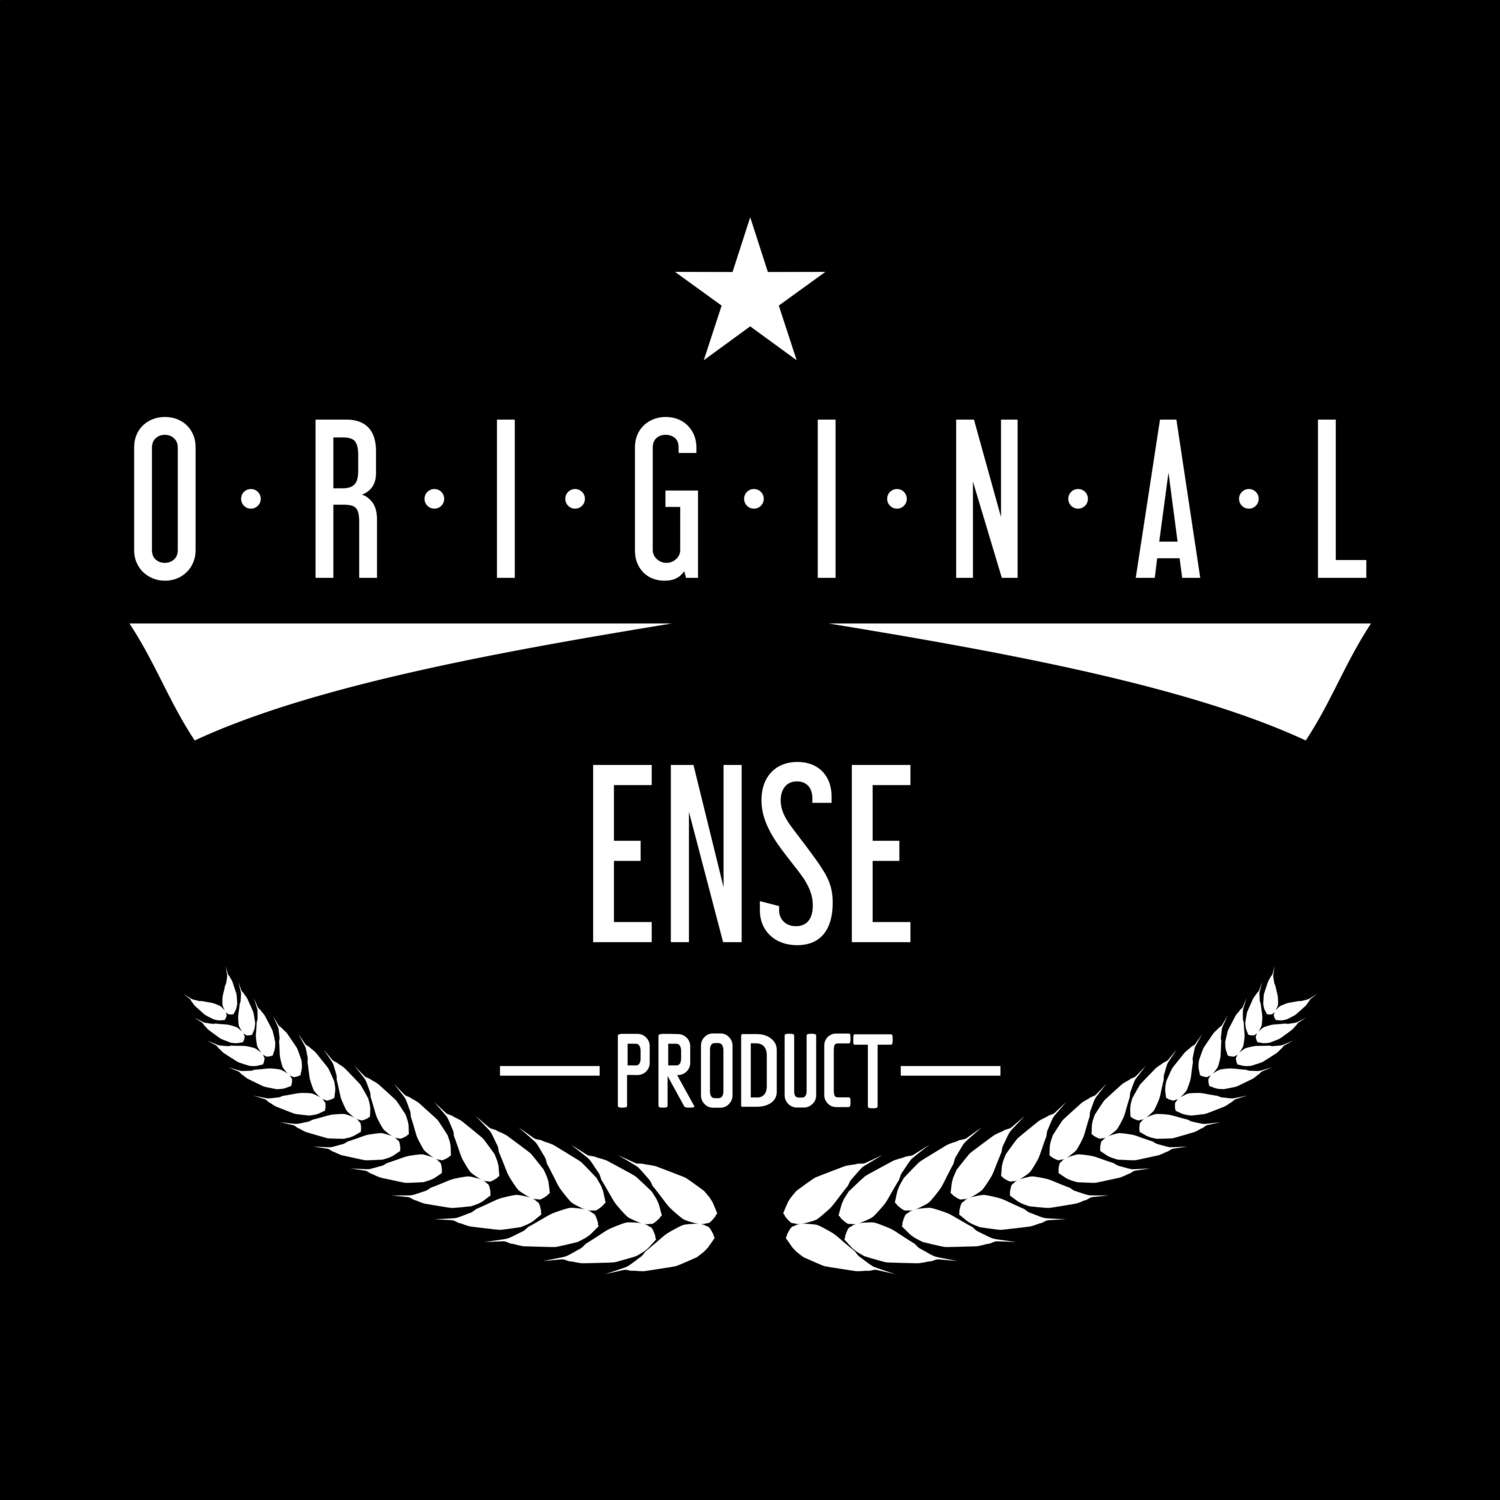 Ense T-Shirt »Original Product«